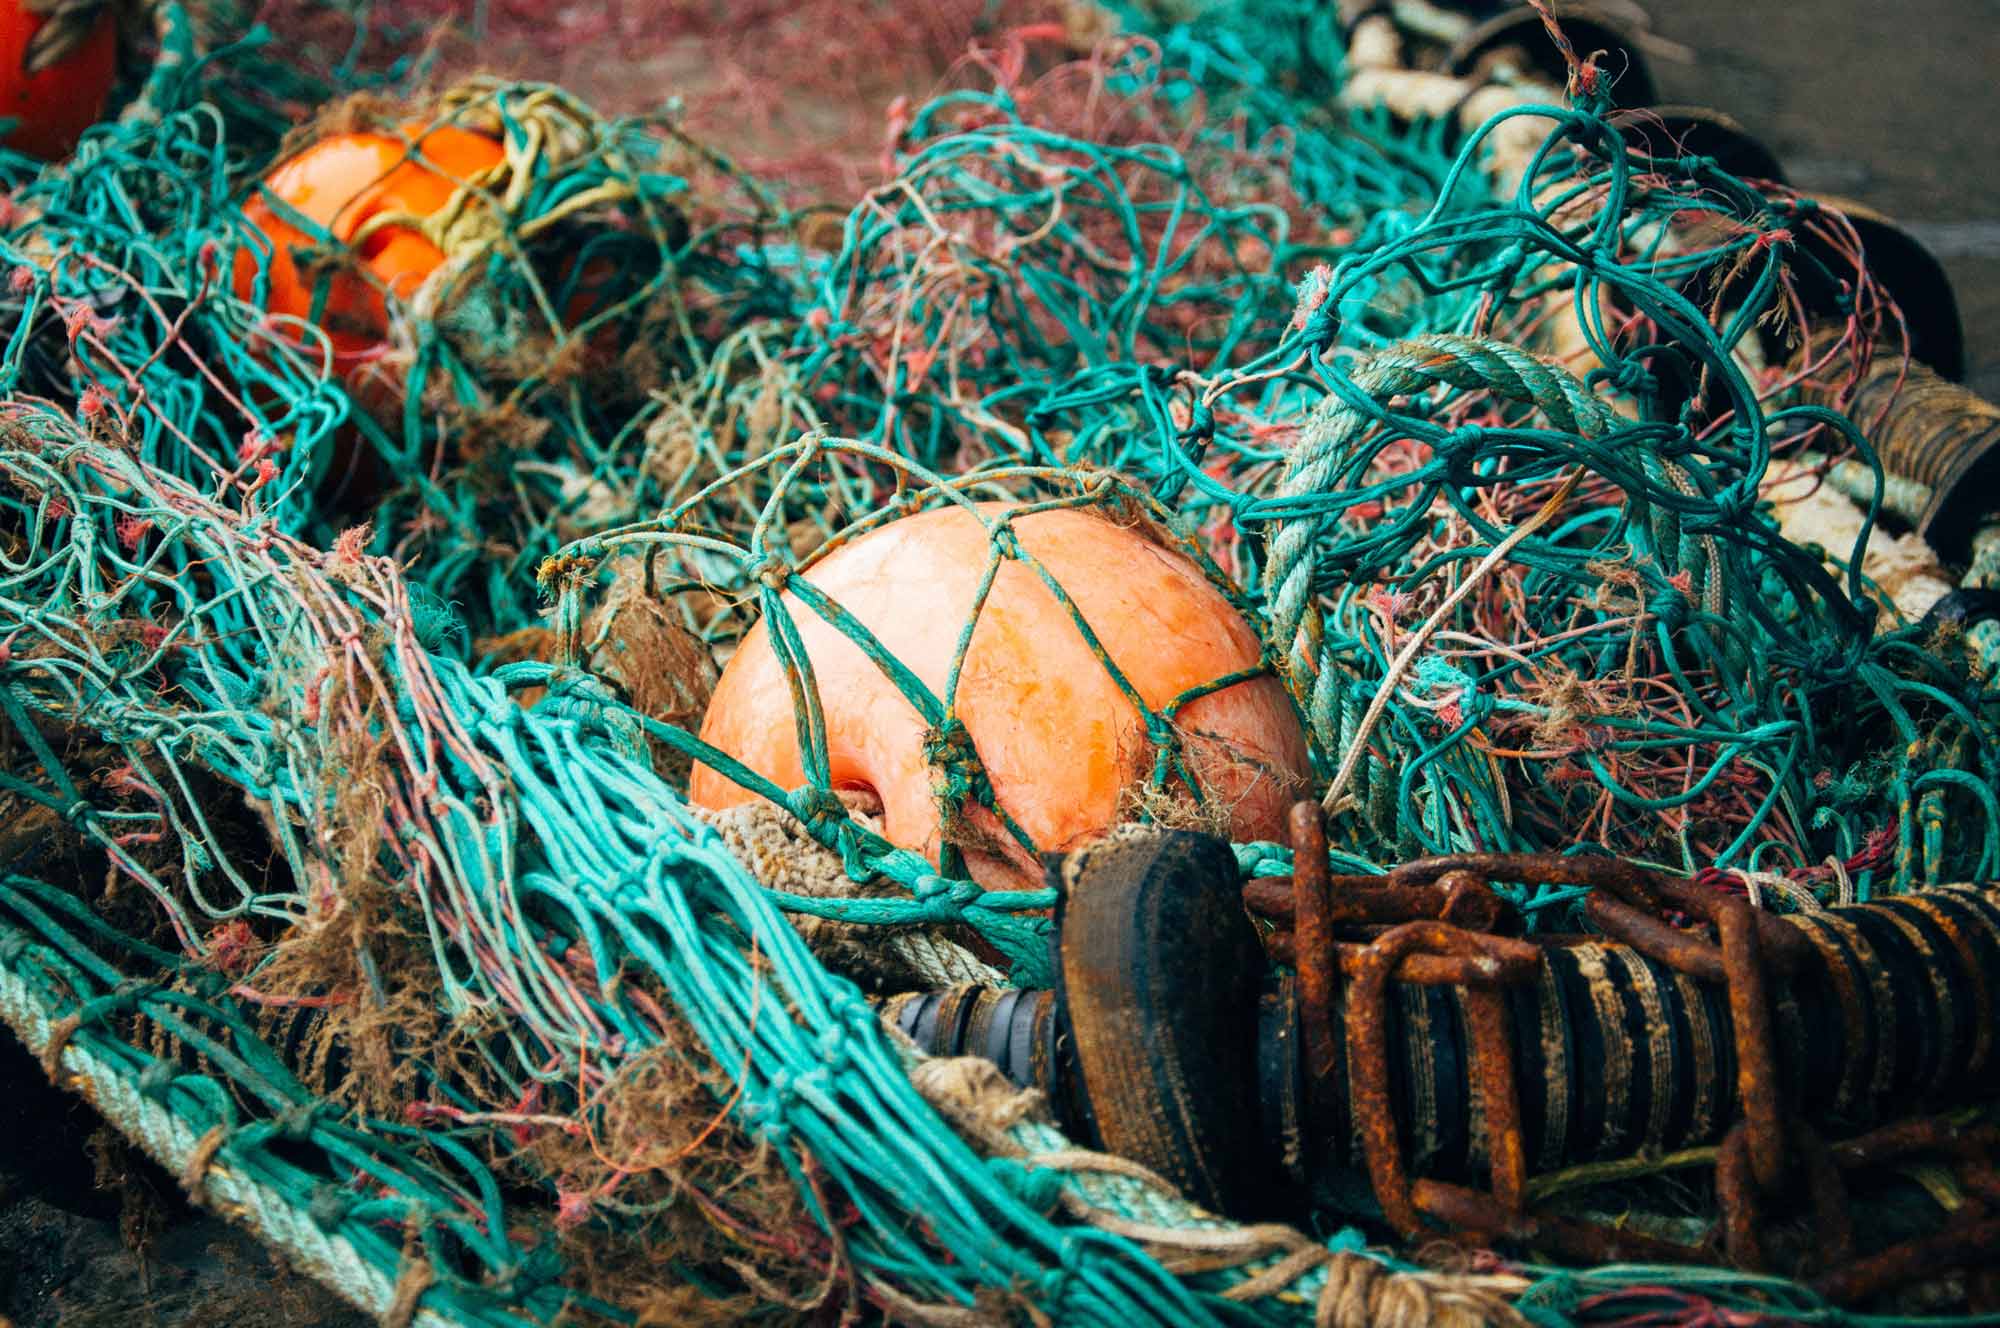 Clipper Oil: Latest Fishing News – ISSF Report Finds Majority of Tuna Stocks Don’t Meet Marine Stewardship Council Standards